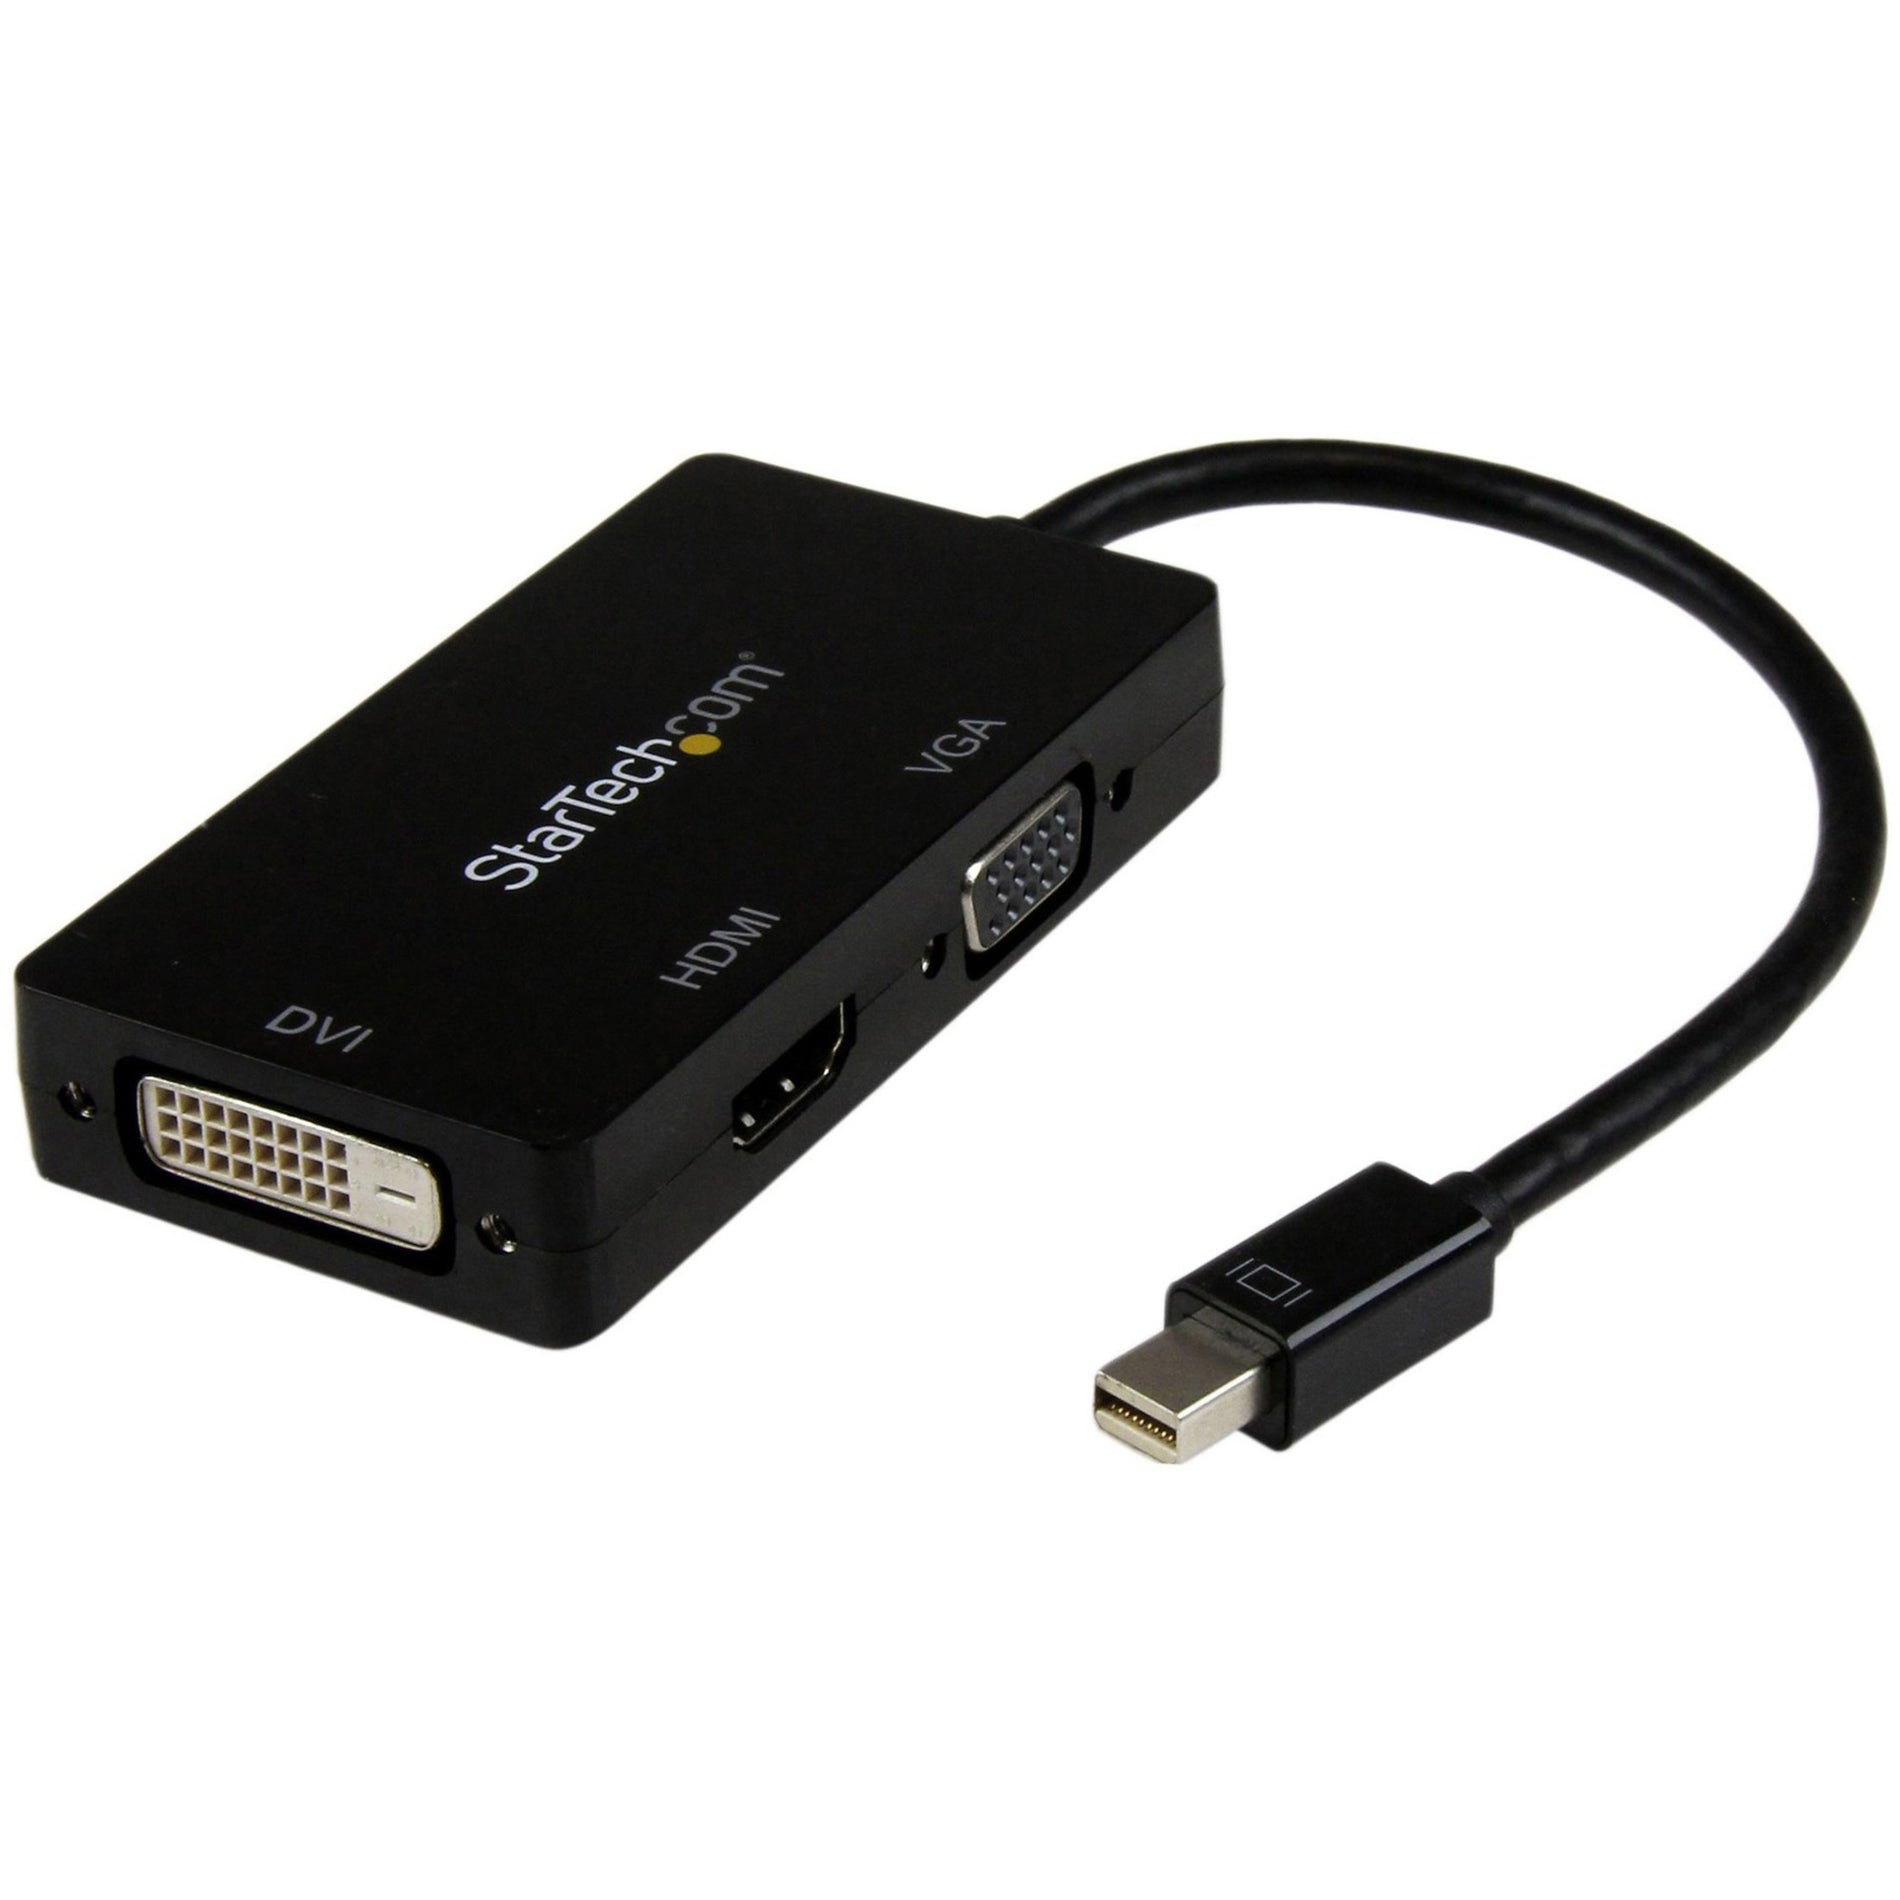 StarTech.com MDP2VGDVHD Mini DisplayPort to VGA DVI HDMI Adapter, 3-in-1 mDP Converter